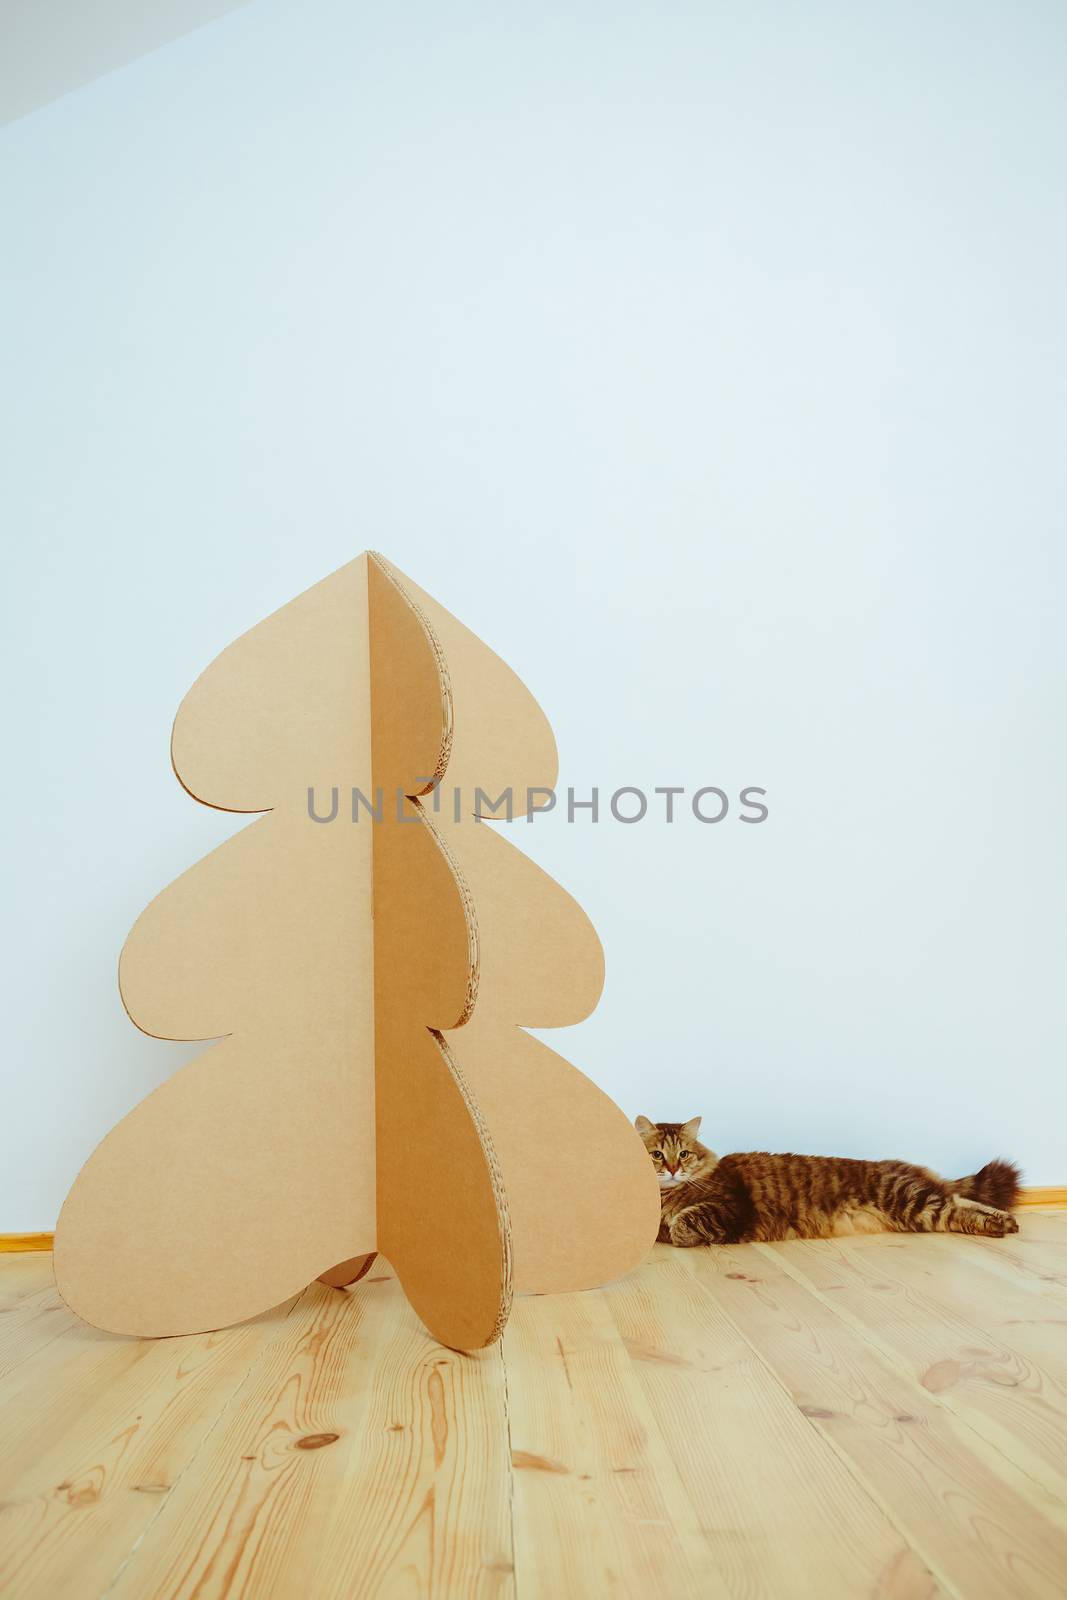 Christmas Tree Made Of Cardboard. New Year by sarymsakov